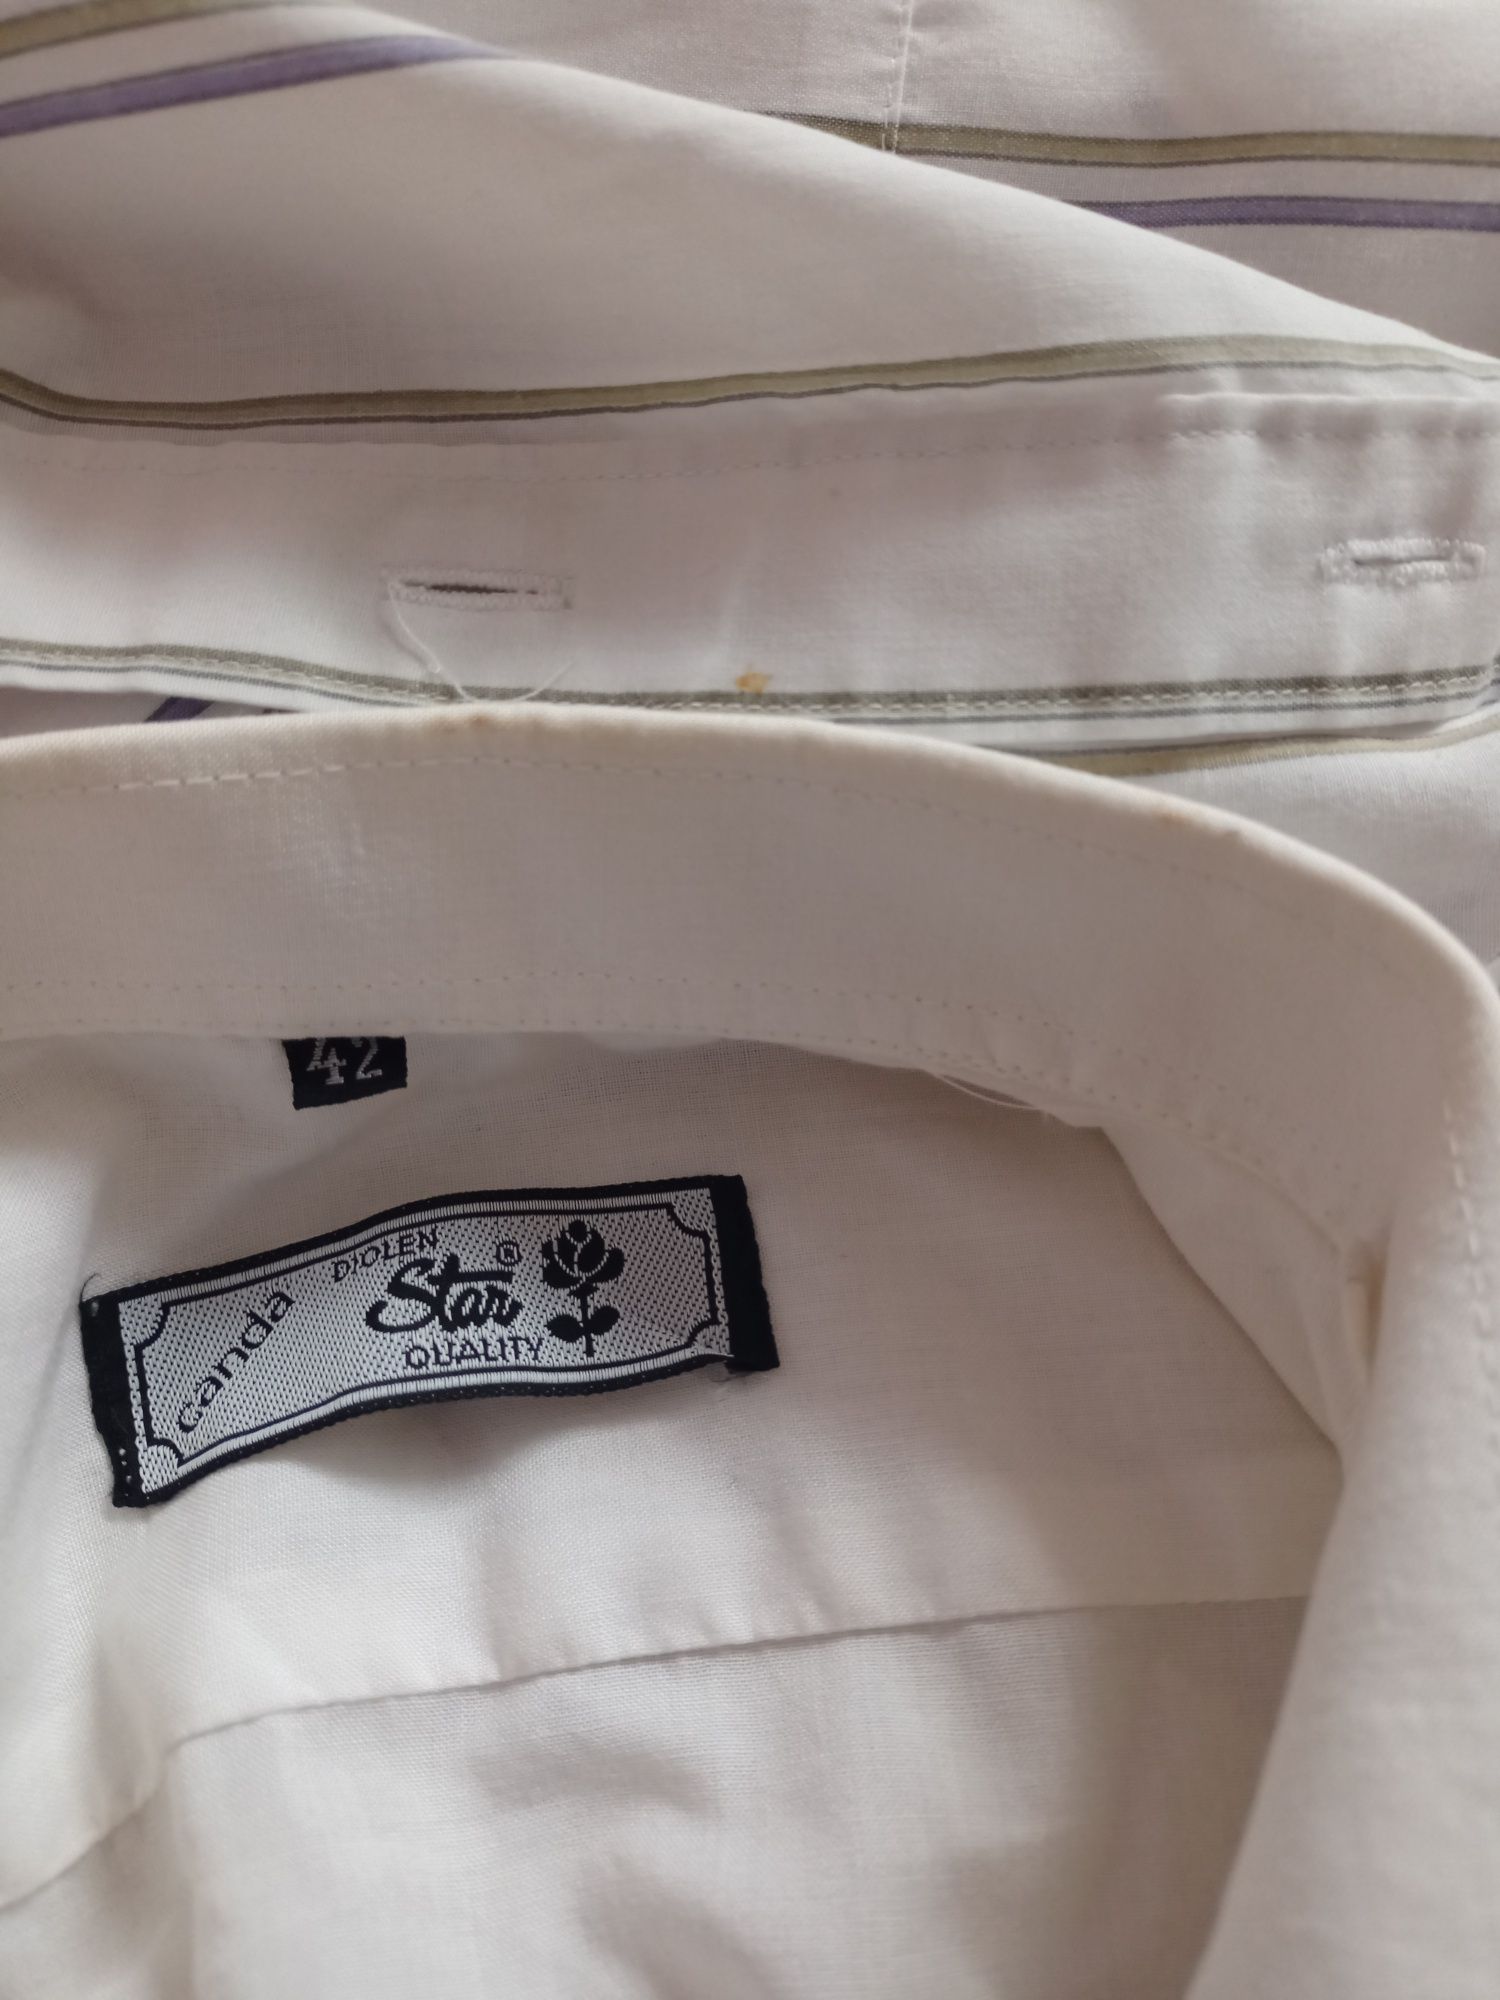 Koszule męskie XL zestaw paka C&A Tom Tailor koszula męska 41 42 F&F